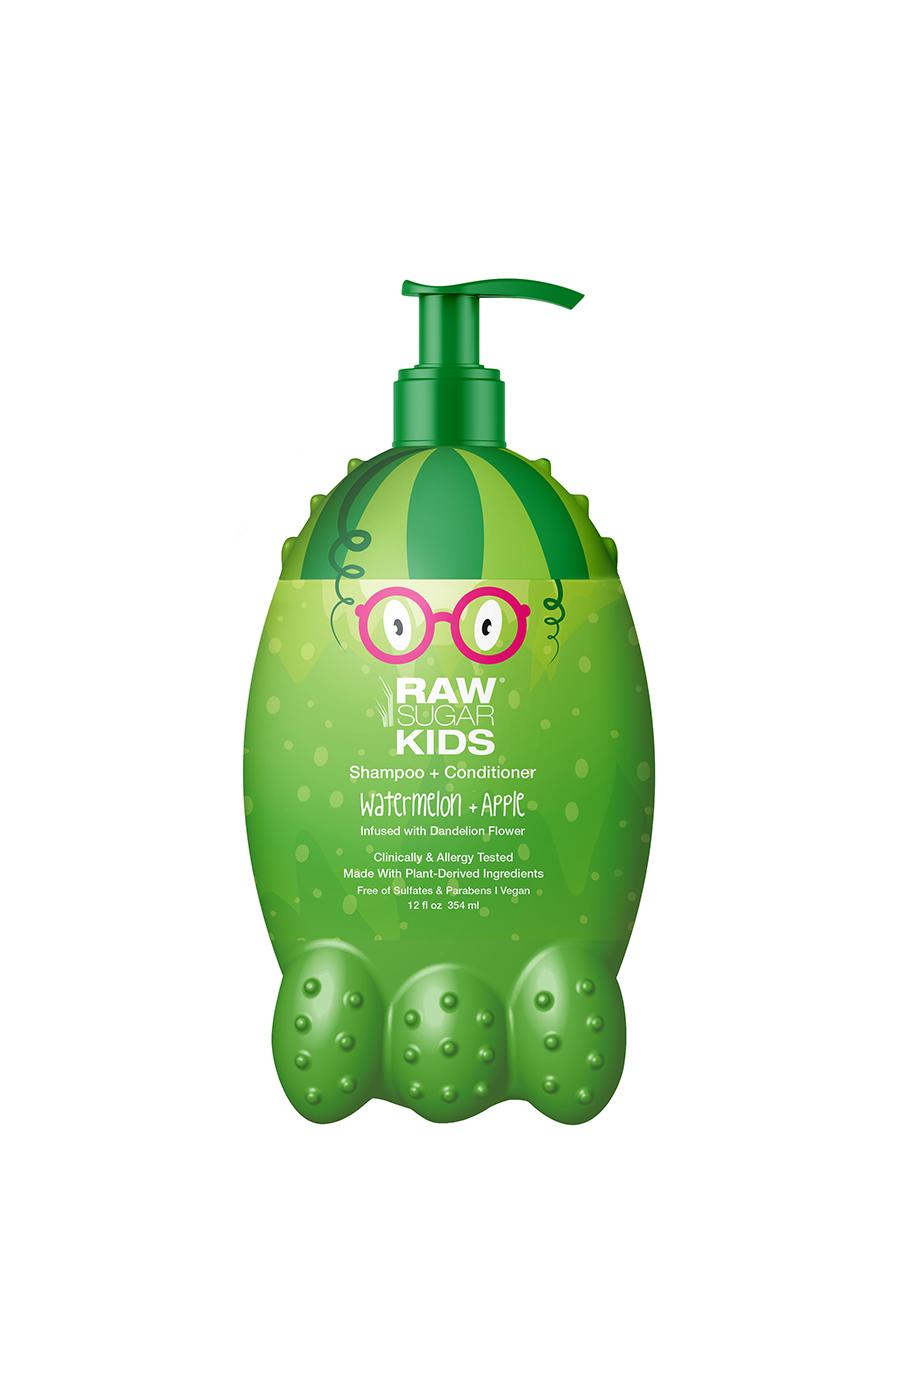 Raw Sugar Kids Shampoo + Conditioner - Watermelon + Apple; image 1 of 2